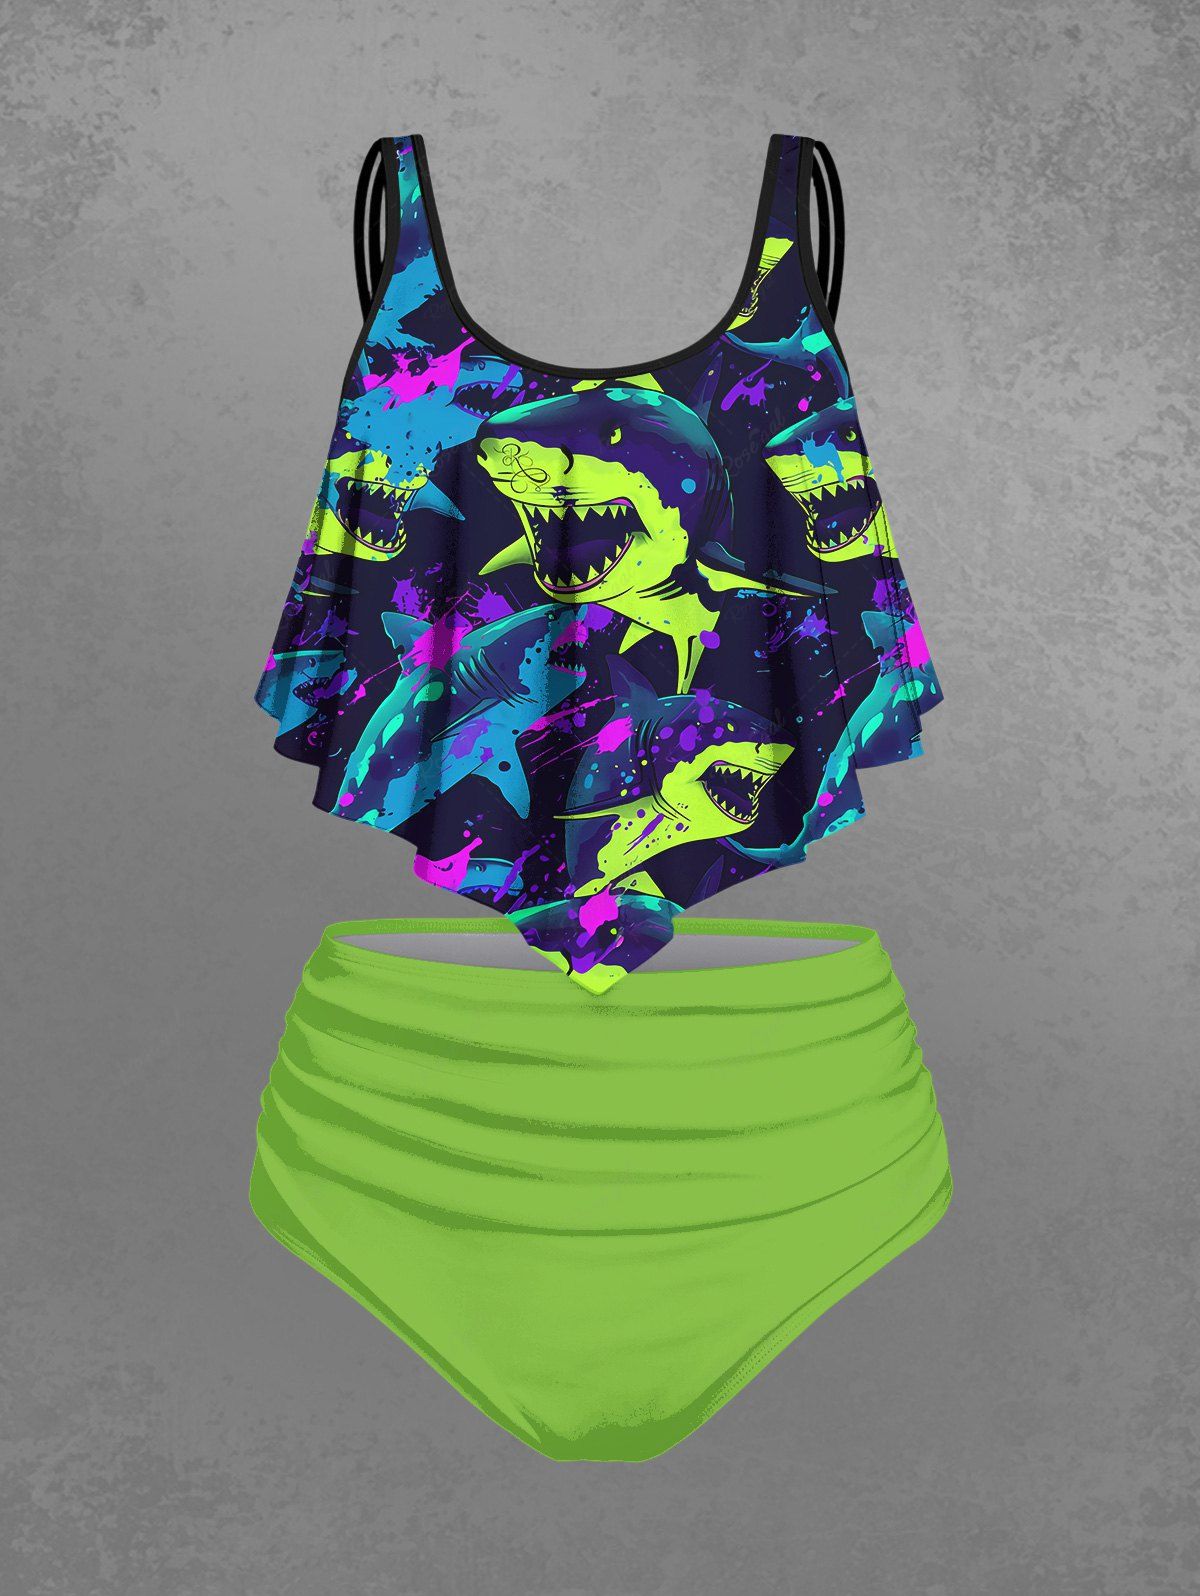 Gothic Neon Color Shark Sea Creatures Print Peplum Hem Backless Tankini Swimsuit